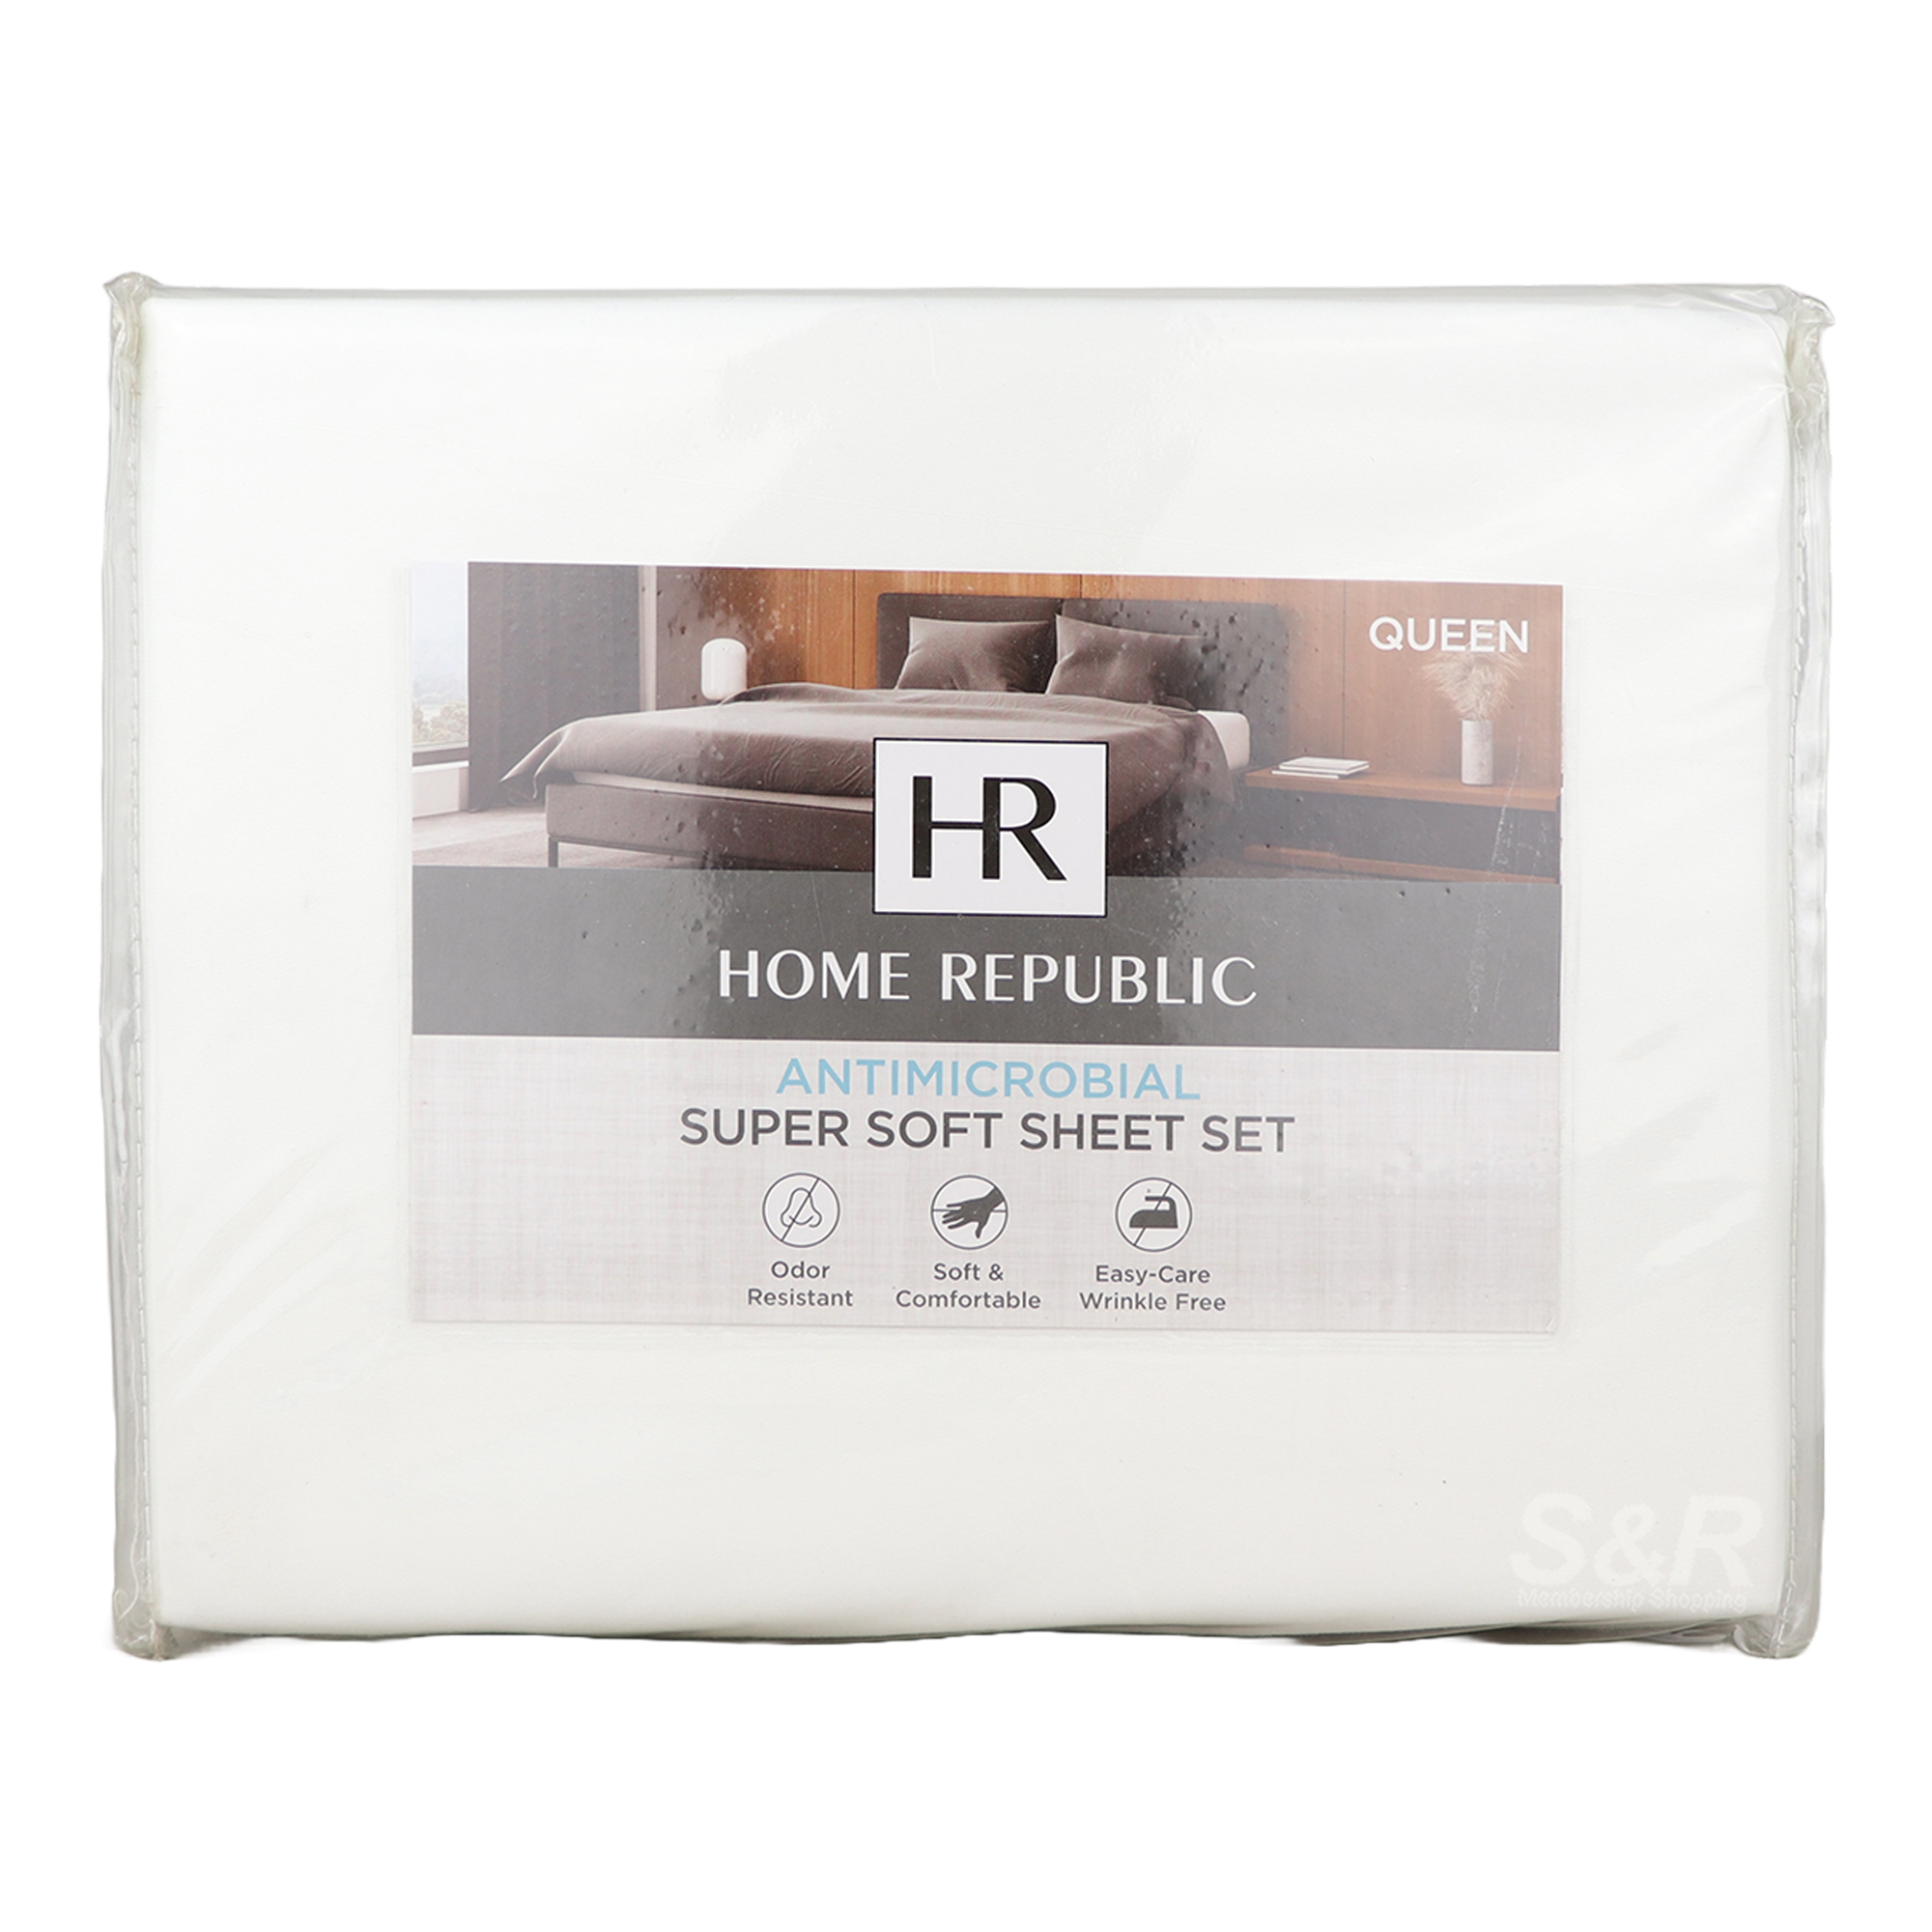 Home Republic Antimicrobial Super Soft Sheet Set Queen